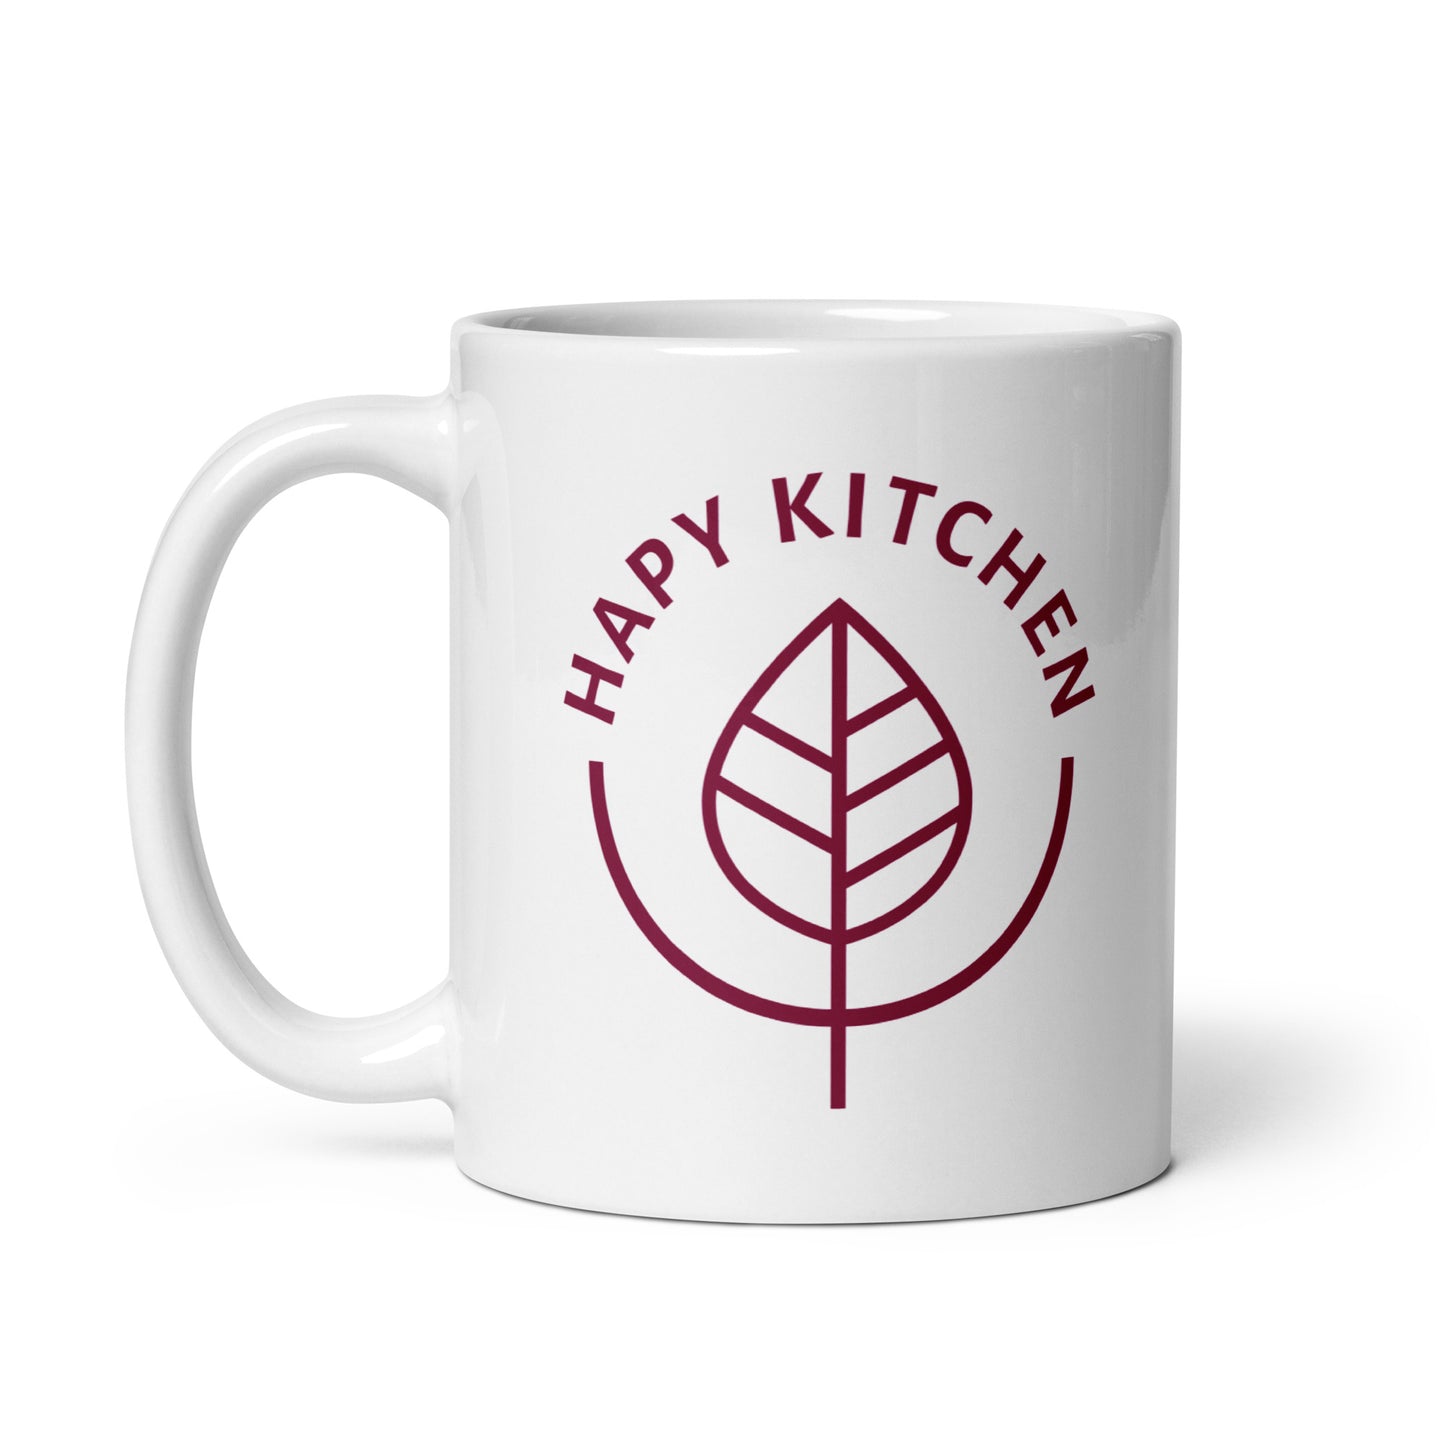 Hapy Kitchen Mug